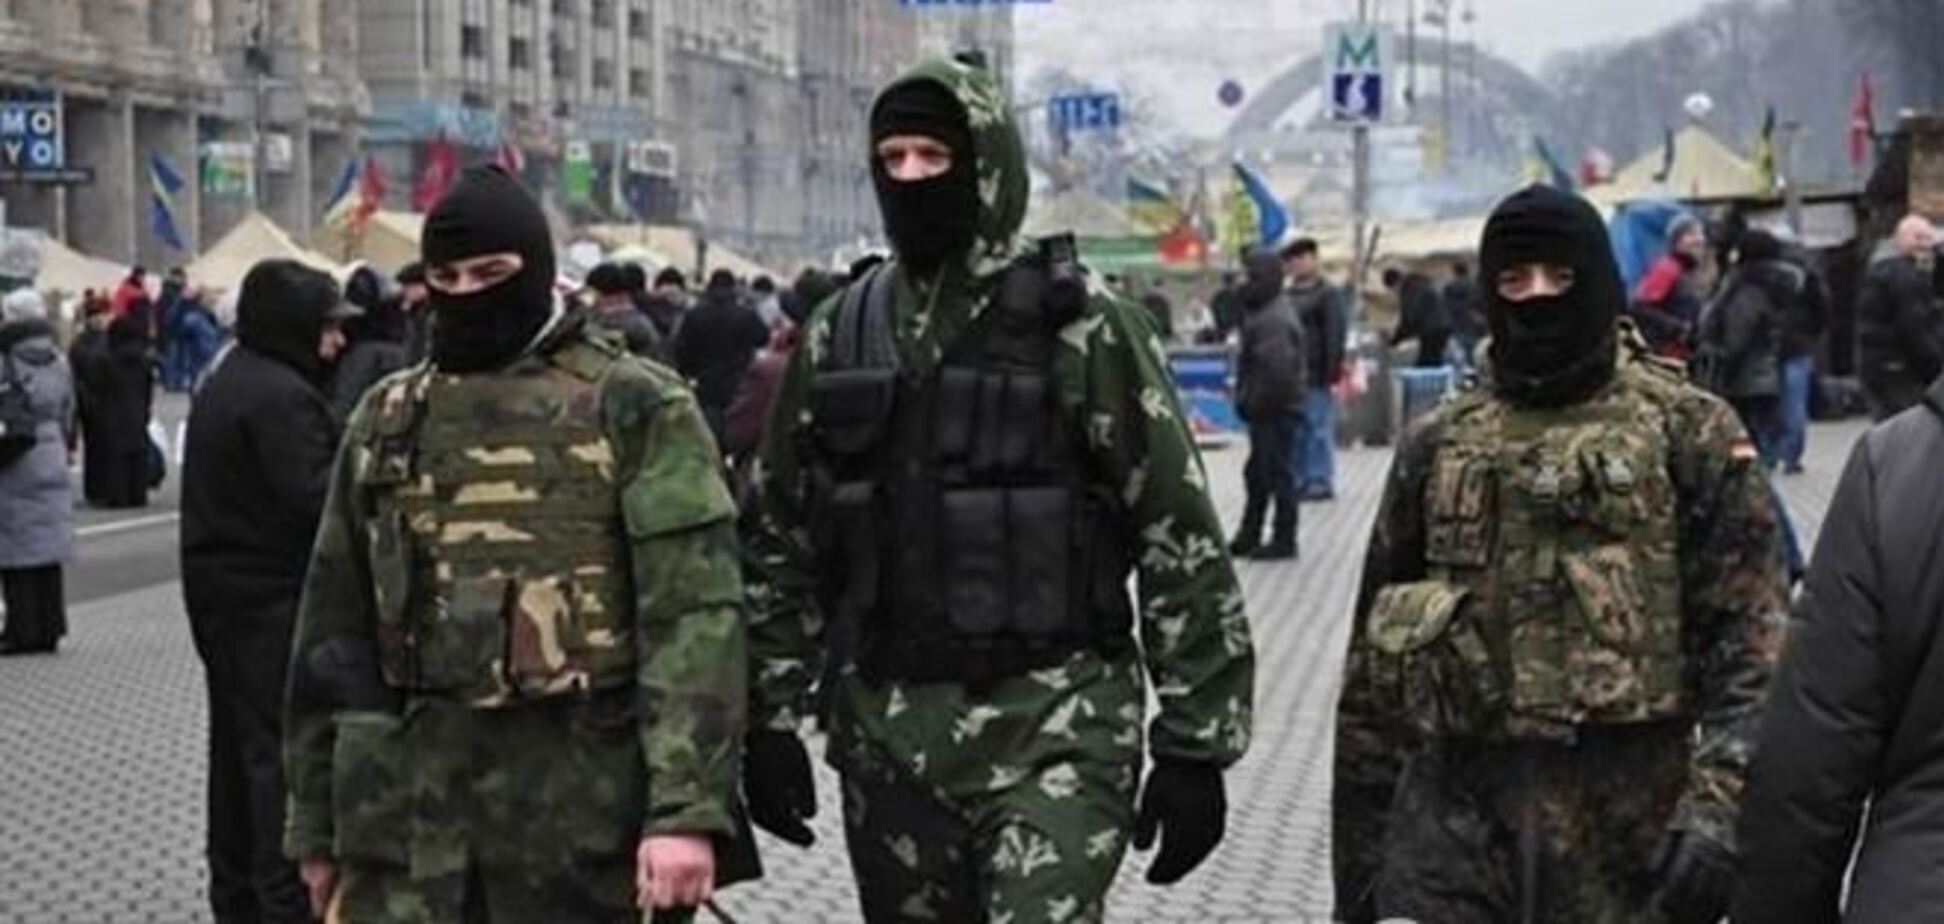 Самооборону Майдана надо заставить снять маски - депутат